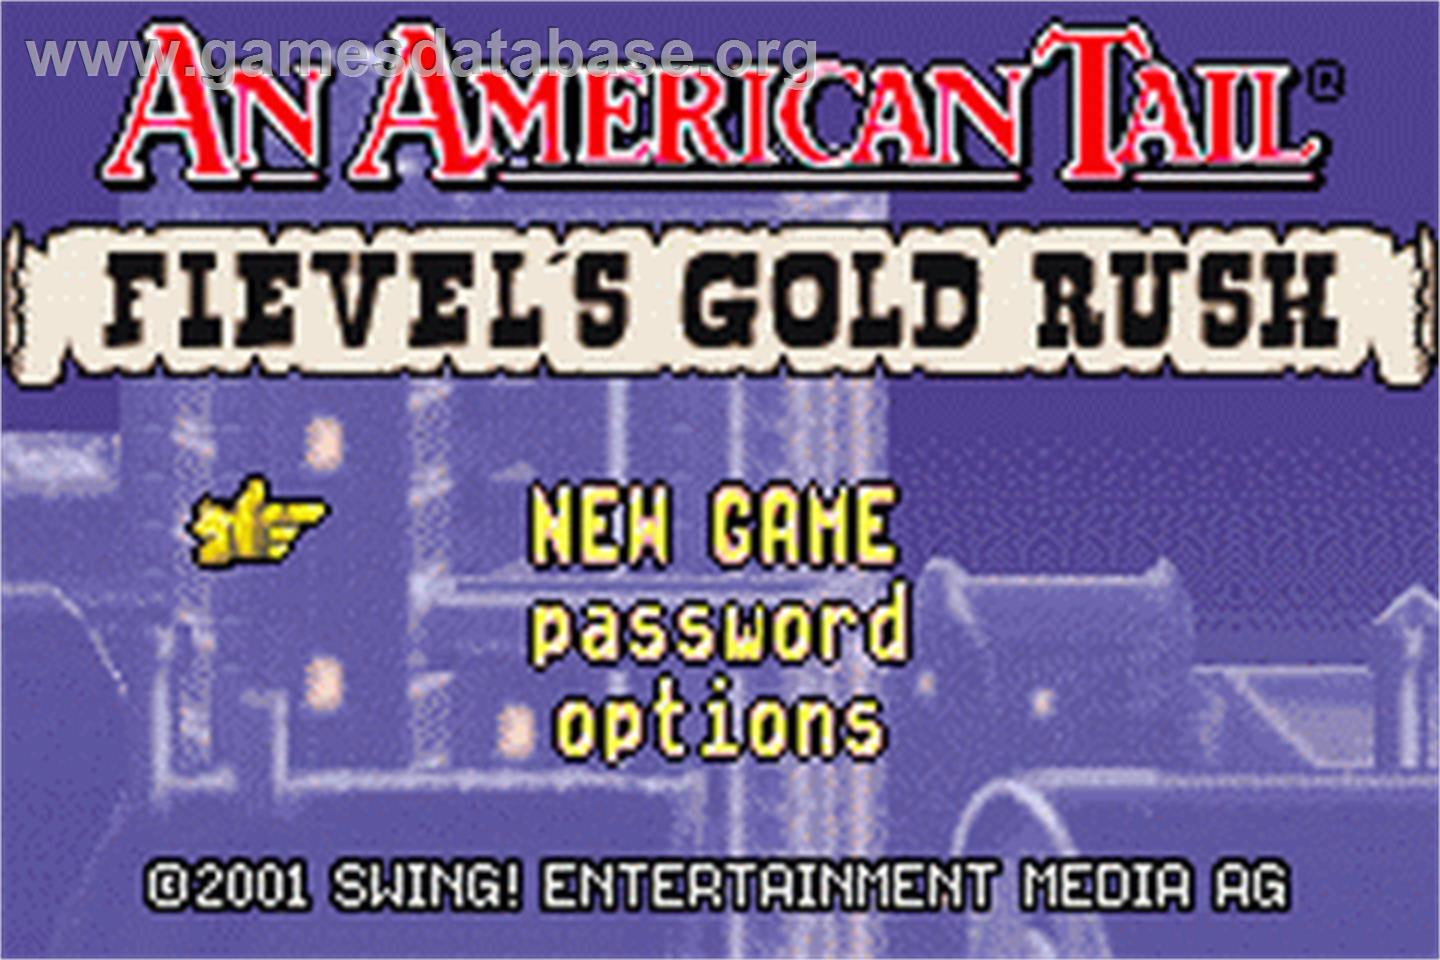 An American Tail: Fievel's Gold Rush - Nintendo Game Boy Advance - Artwork - Title Screen